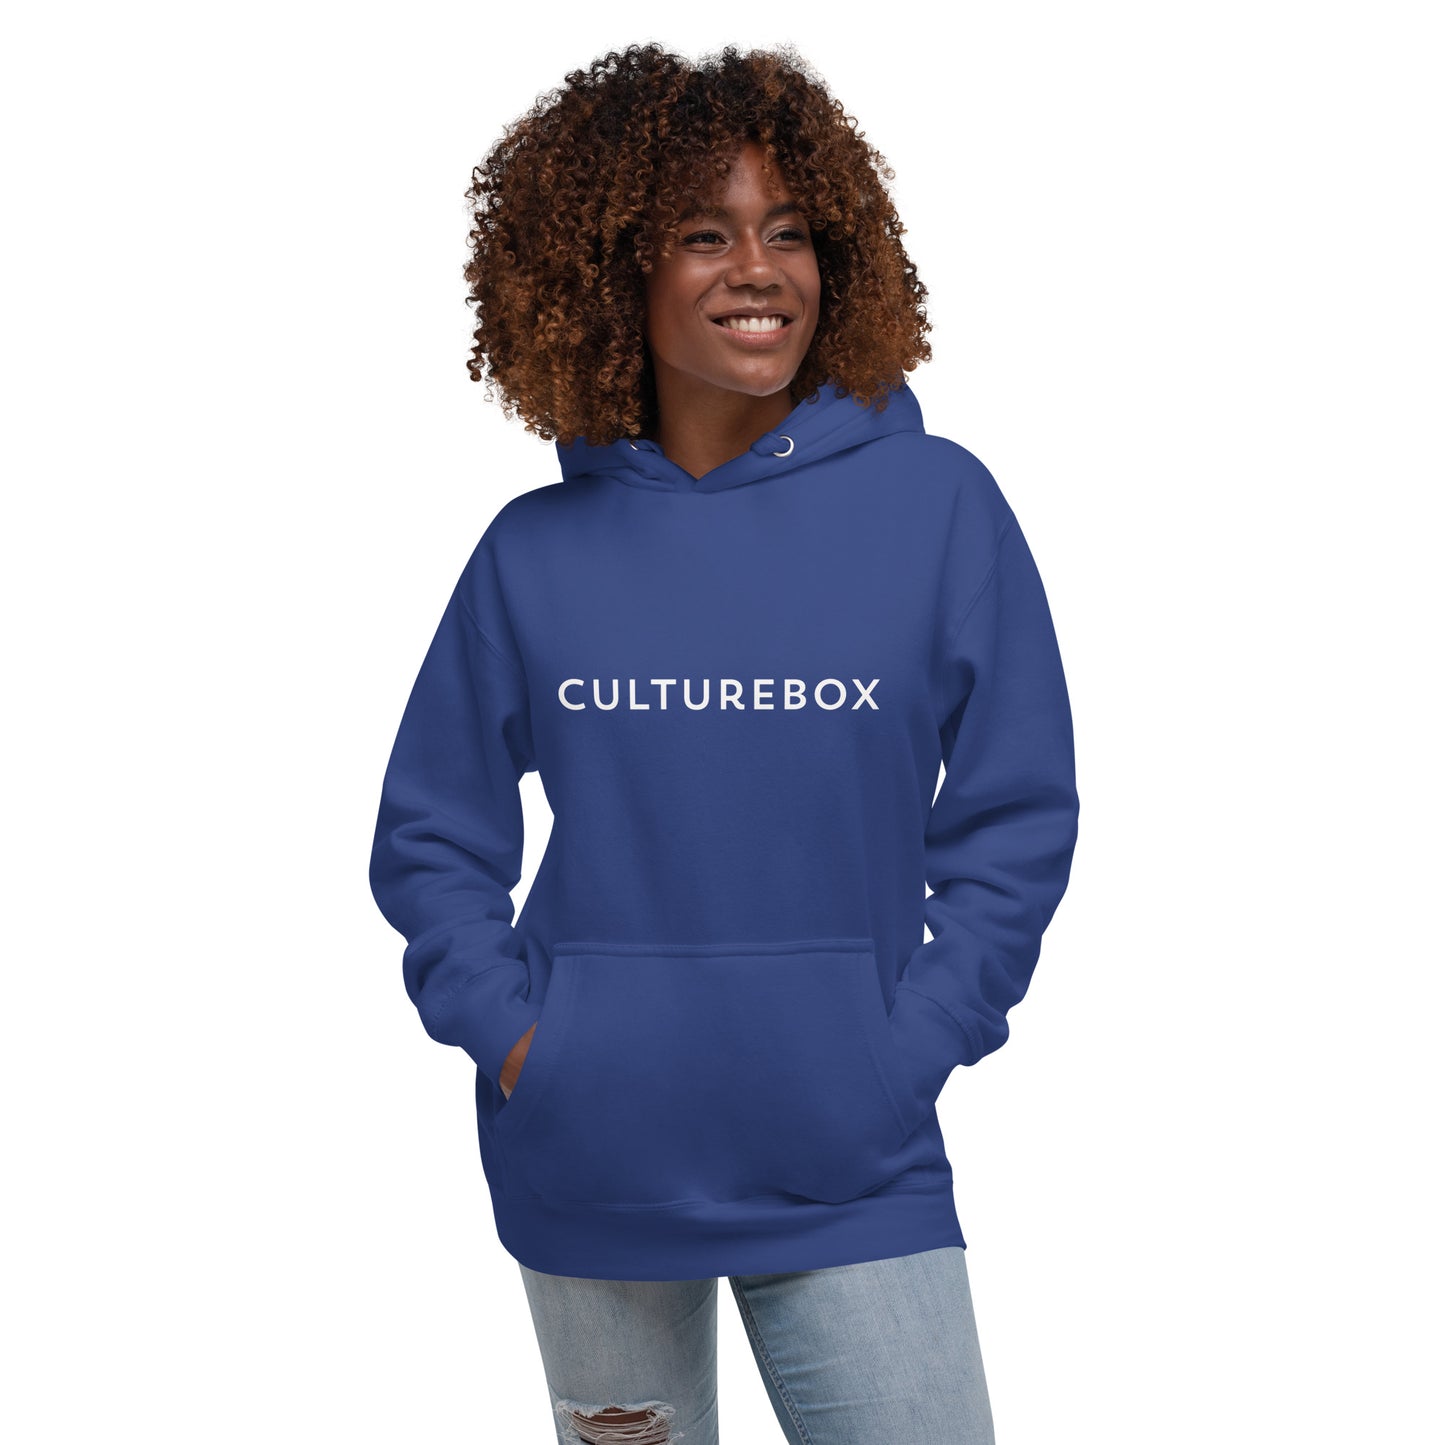 Culturebox Comfy Unisex Hoodie